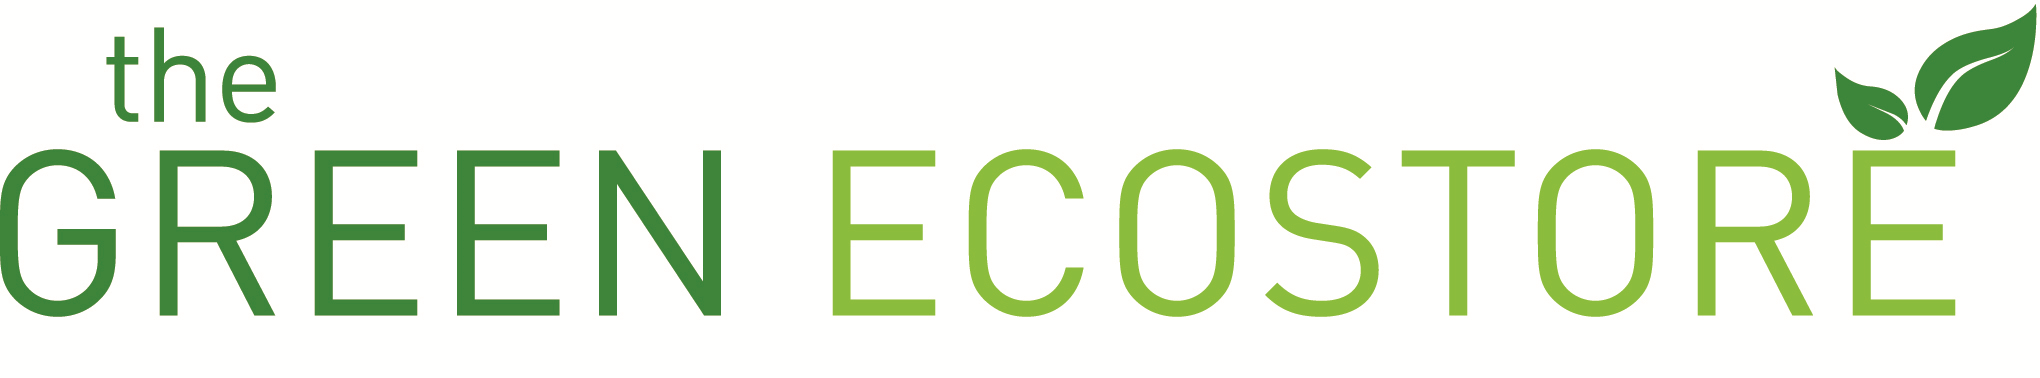 The Green Ecostore Brand Logo